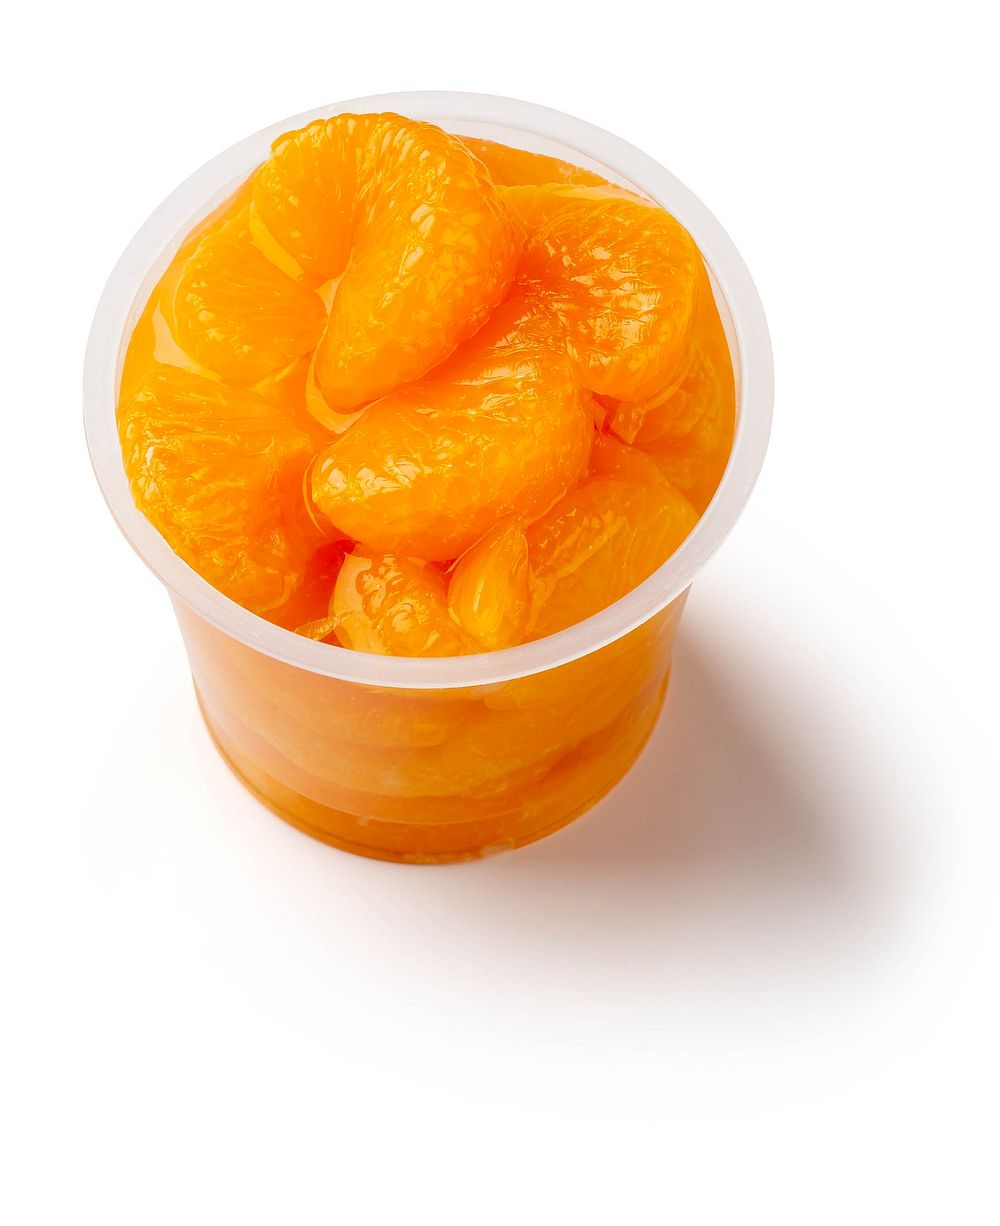 Mandarin orange slices, clear cup. Original public domain image from Flickr